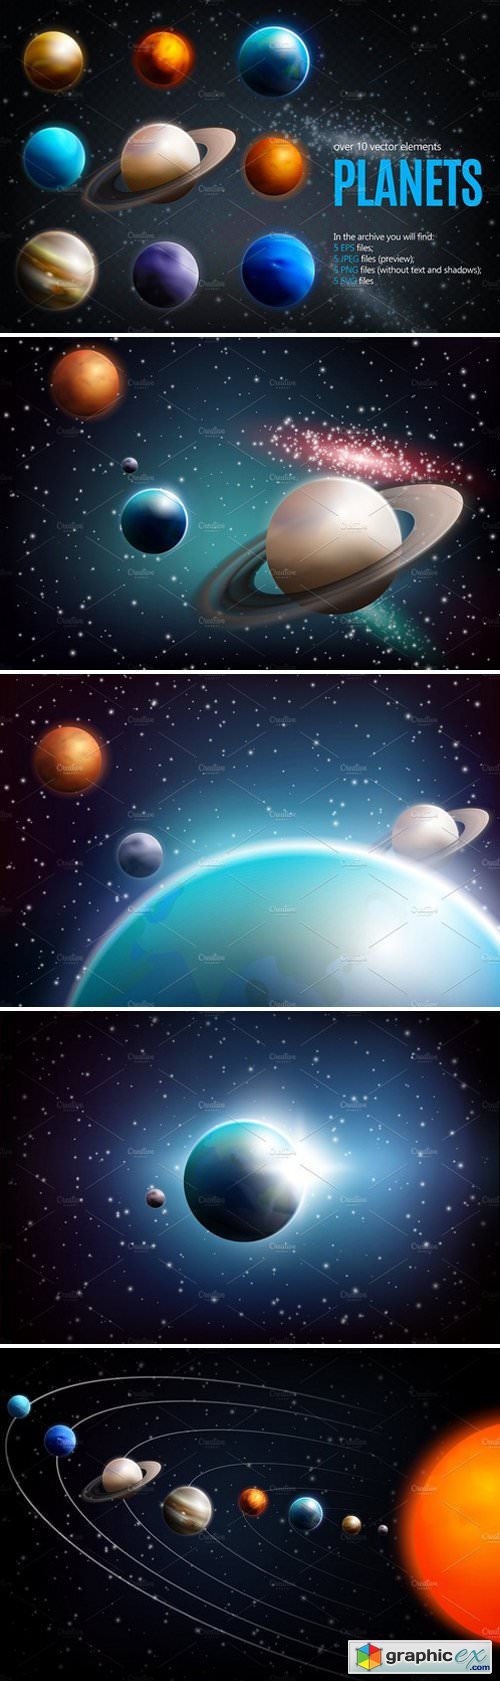 Sale! Planets Realistic Set